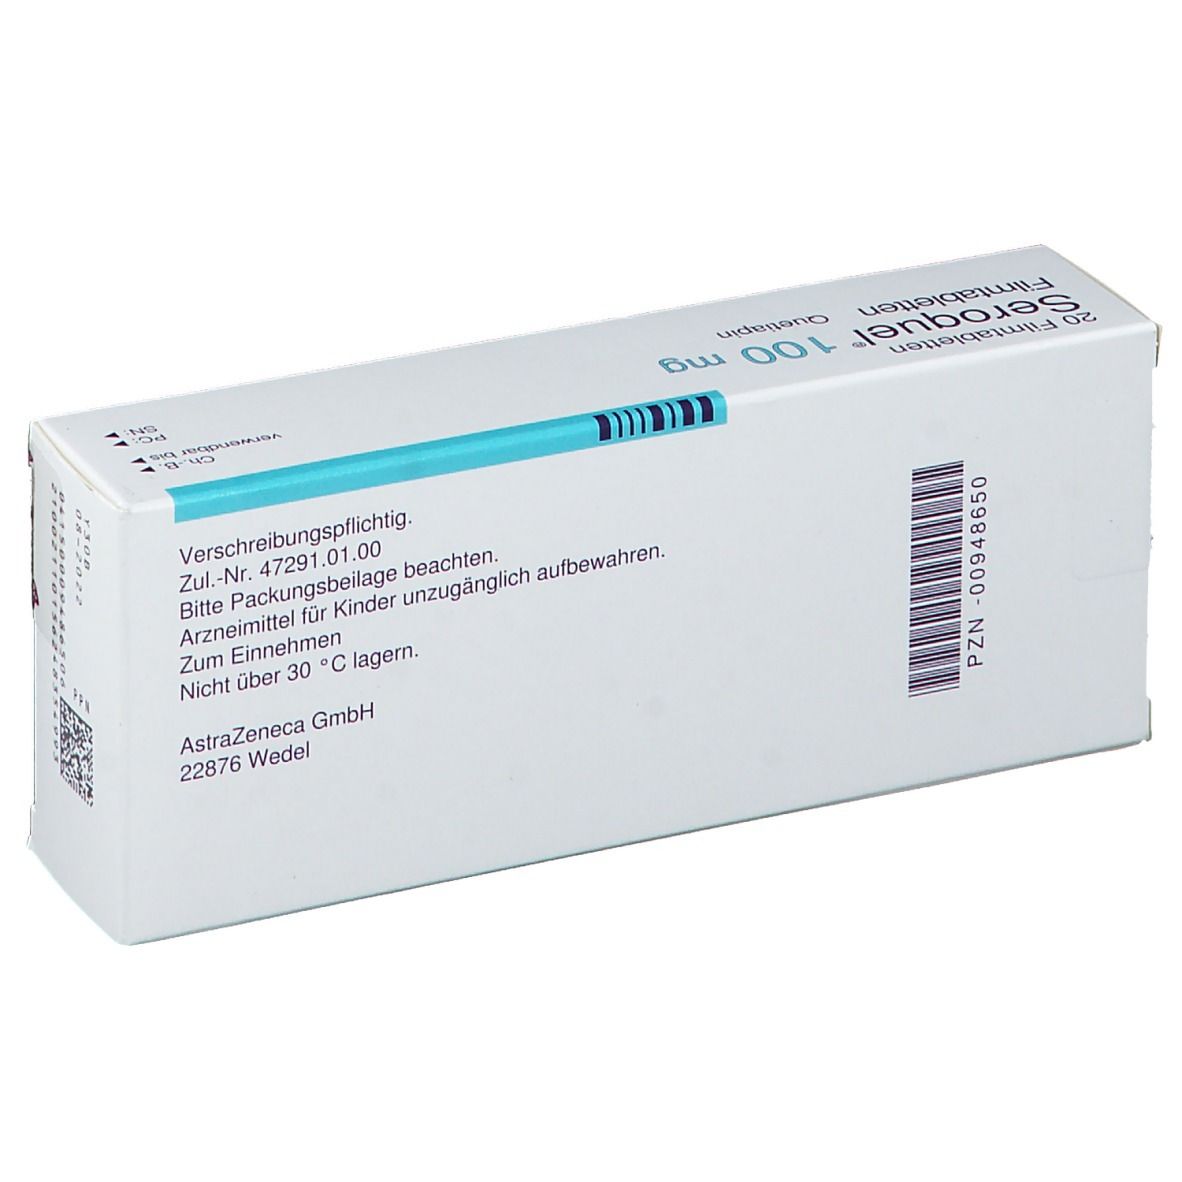 Seroquel® 100  mg